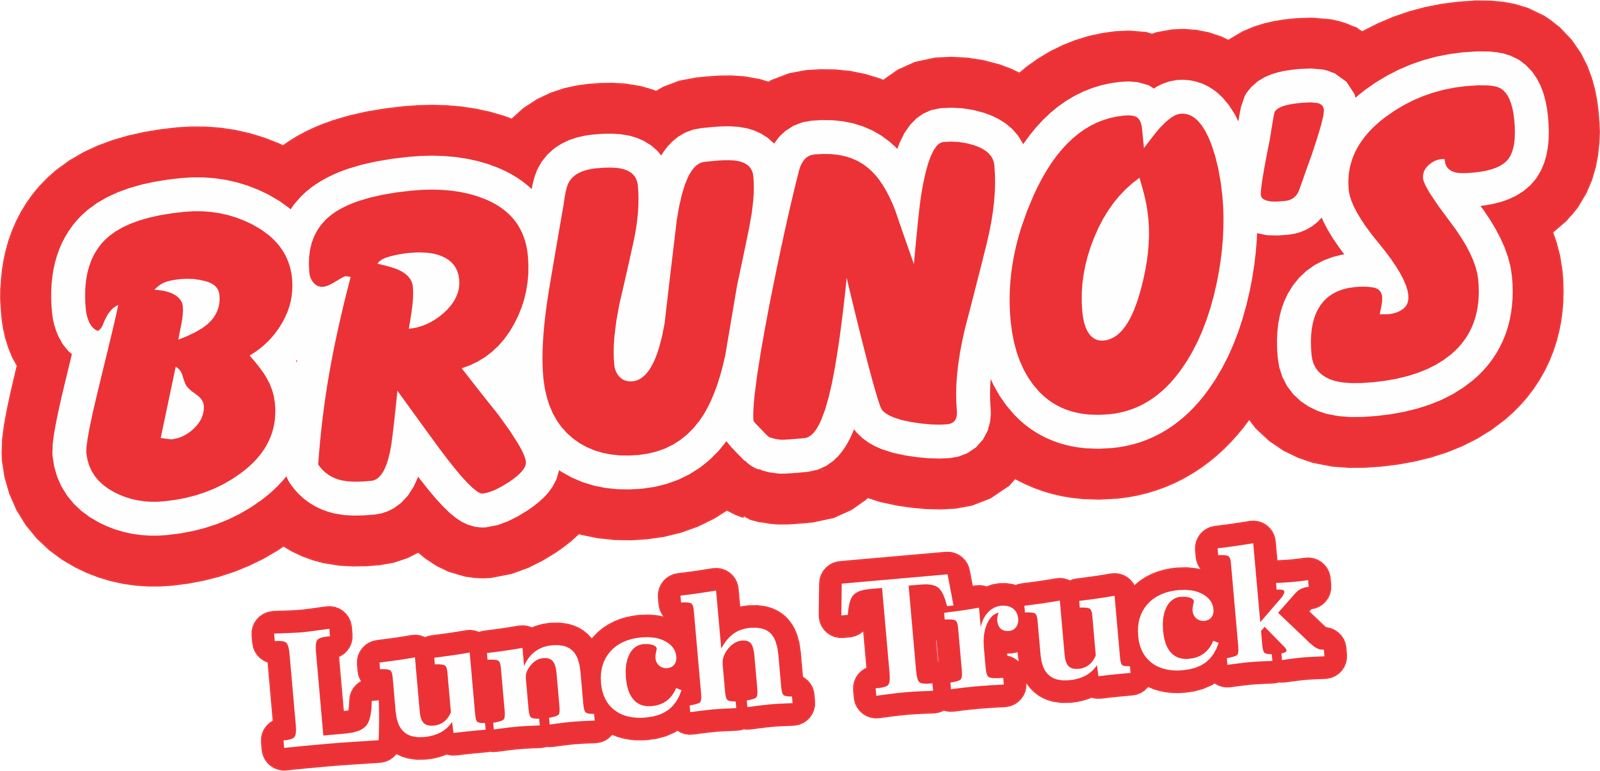 Bruno's Lunch Truck